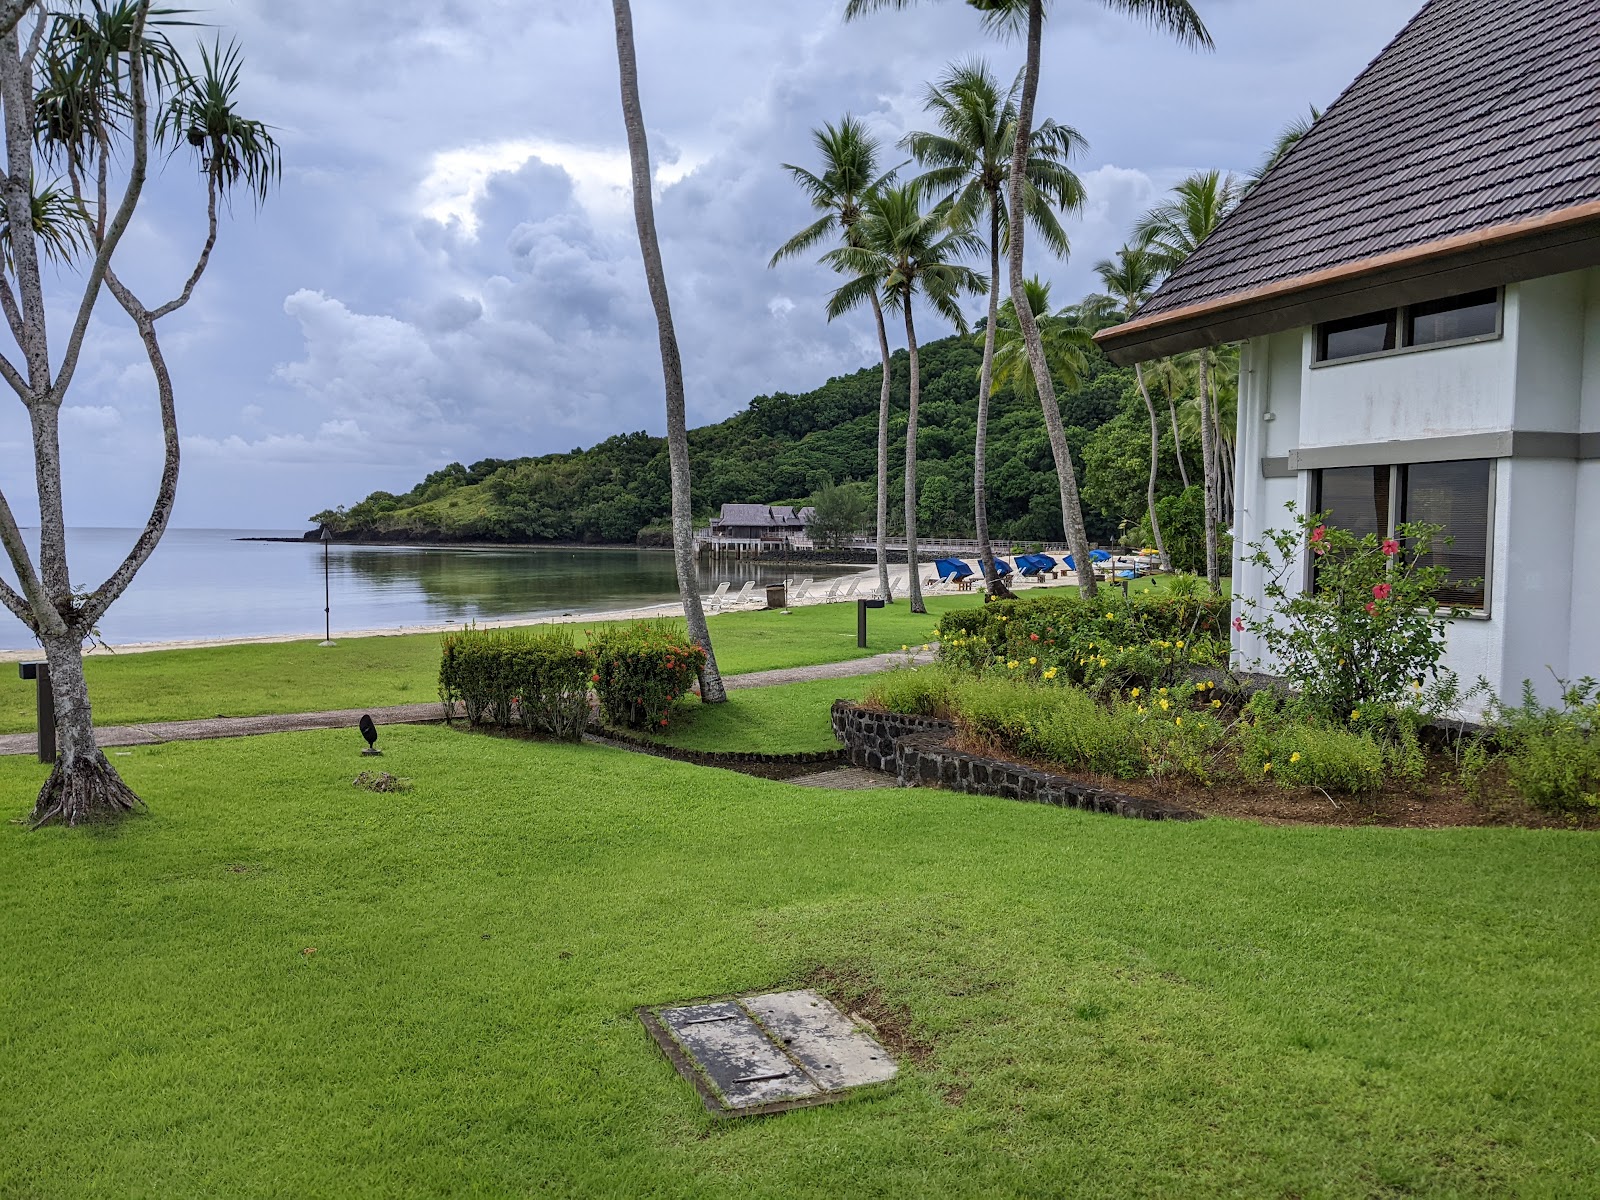 Foto de Palau Pacific Resort apoiado por penhascos